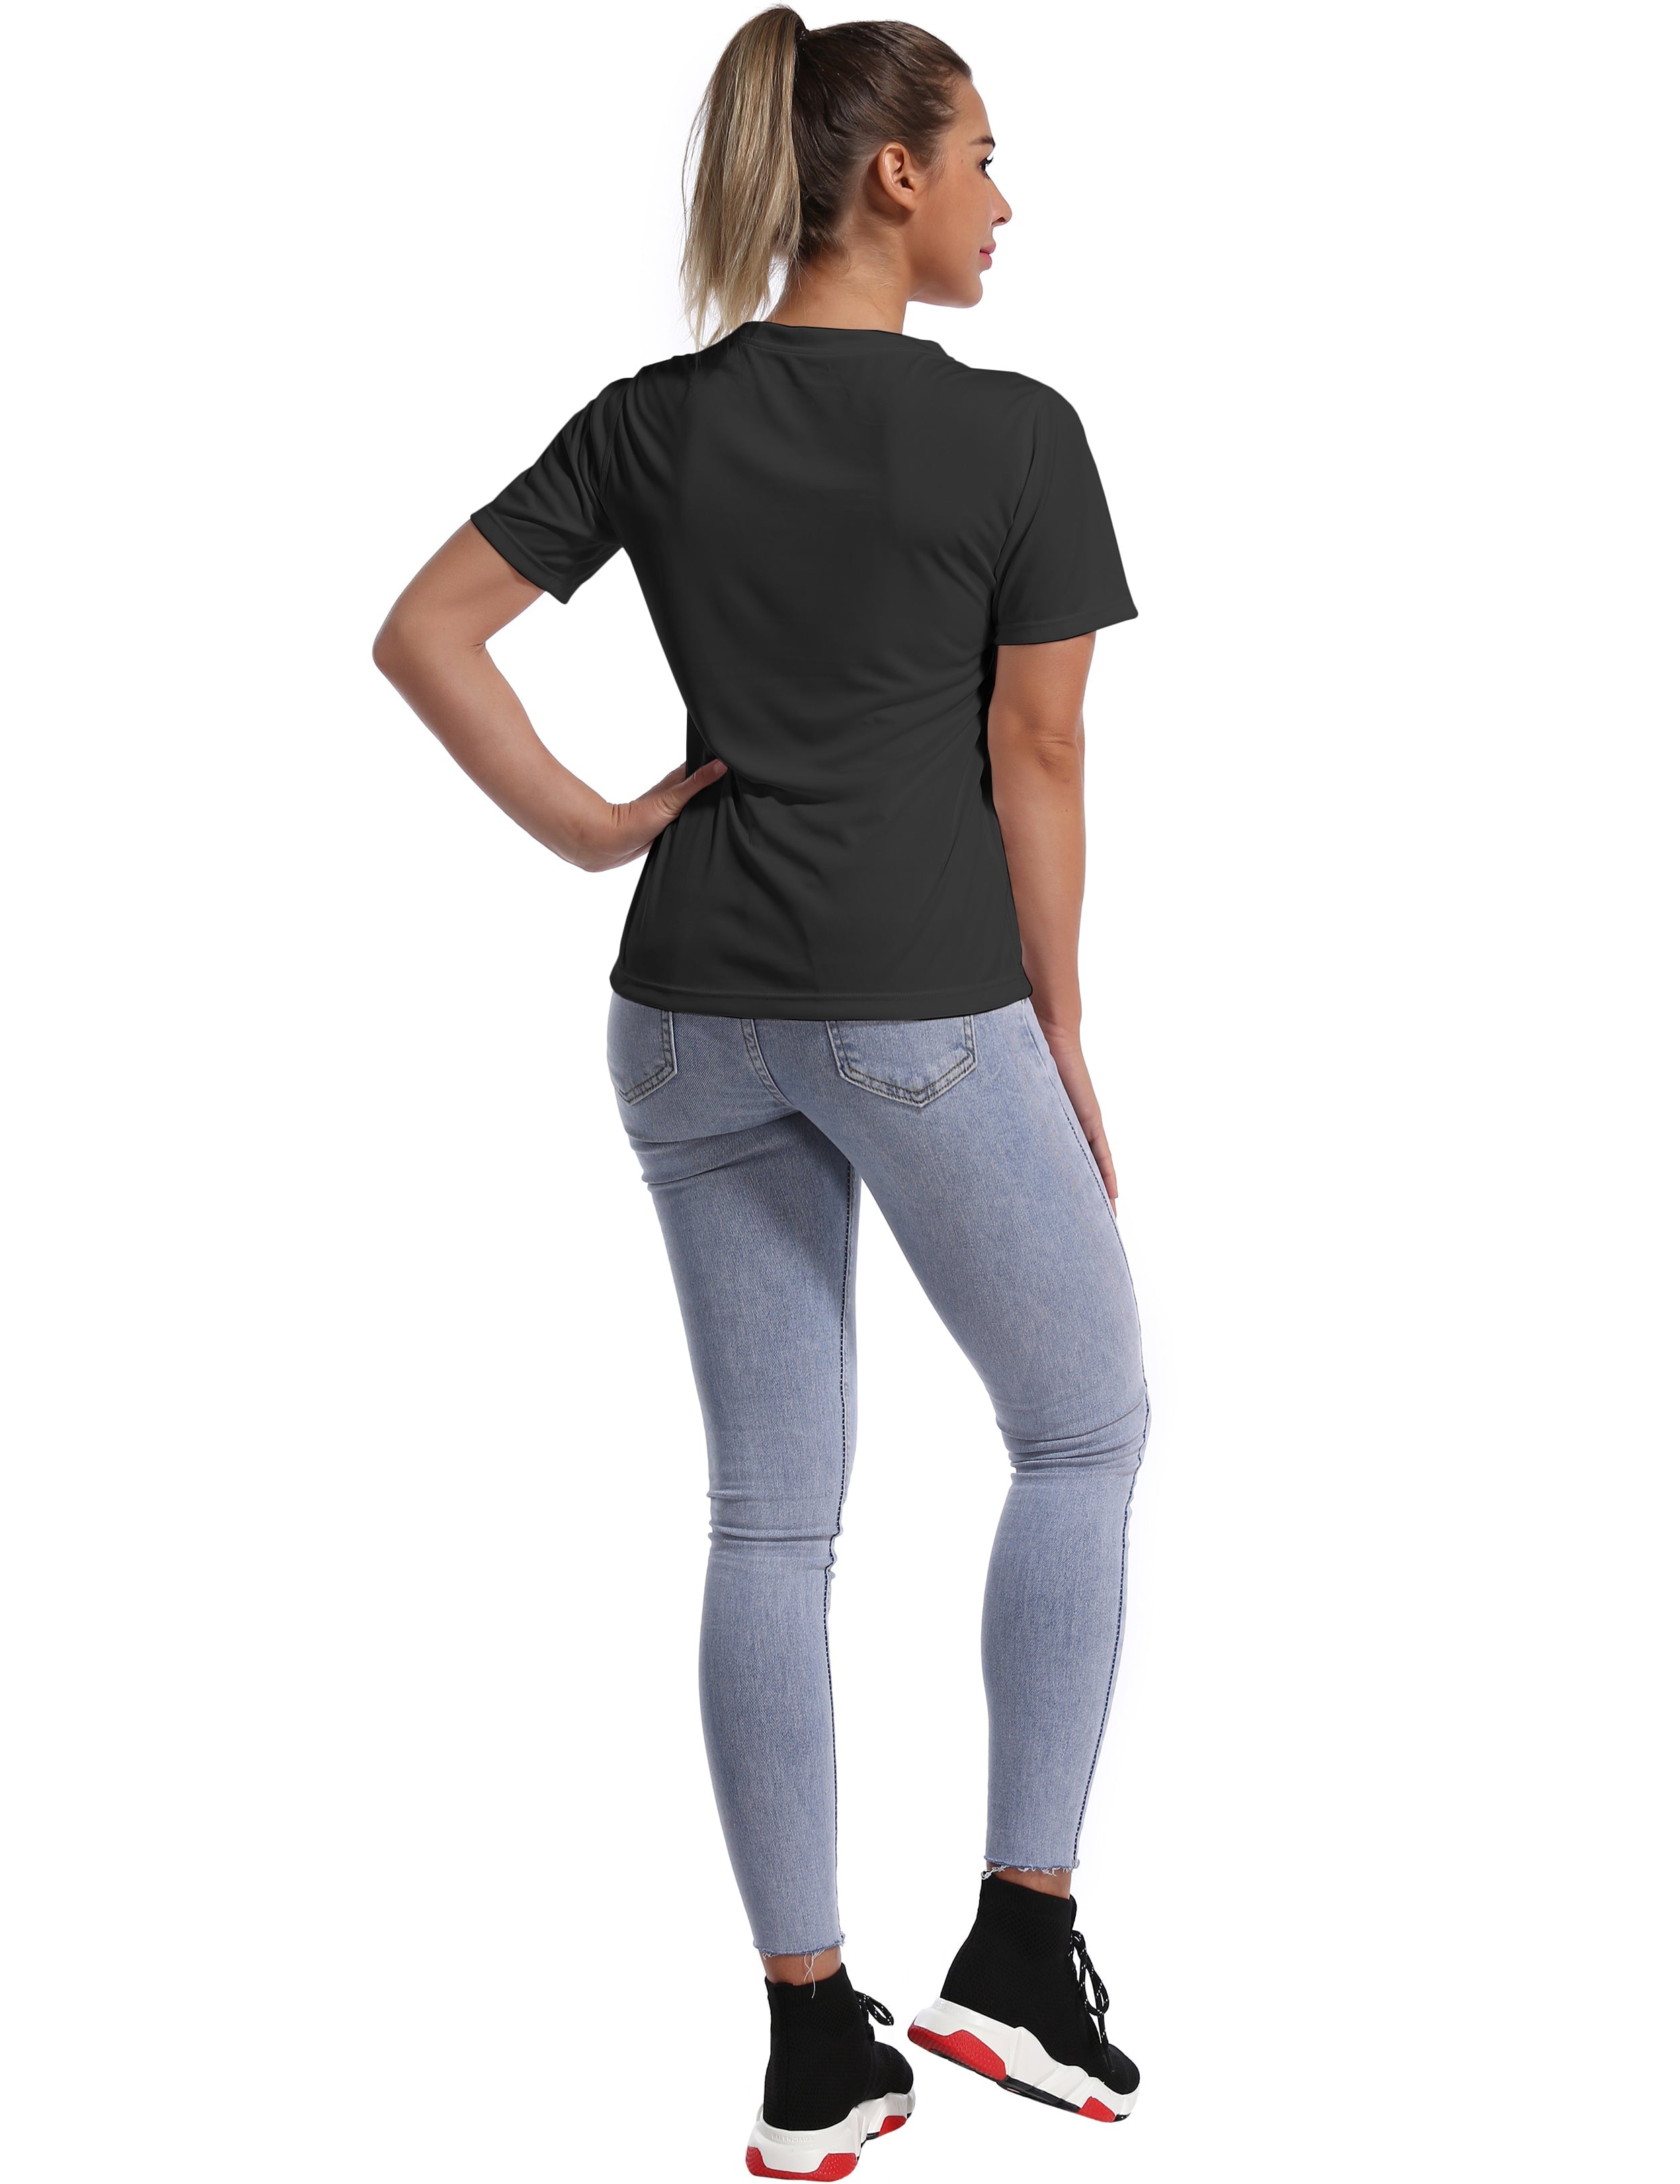 V-Neck Short Sleeve Athletic Shirts black_Pilates